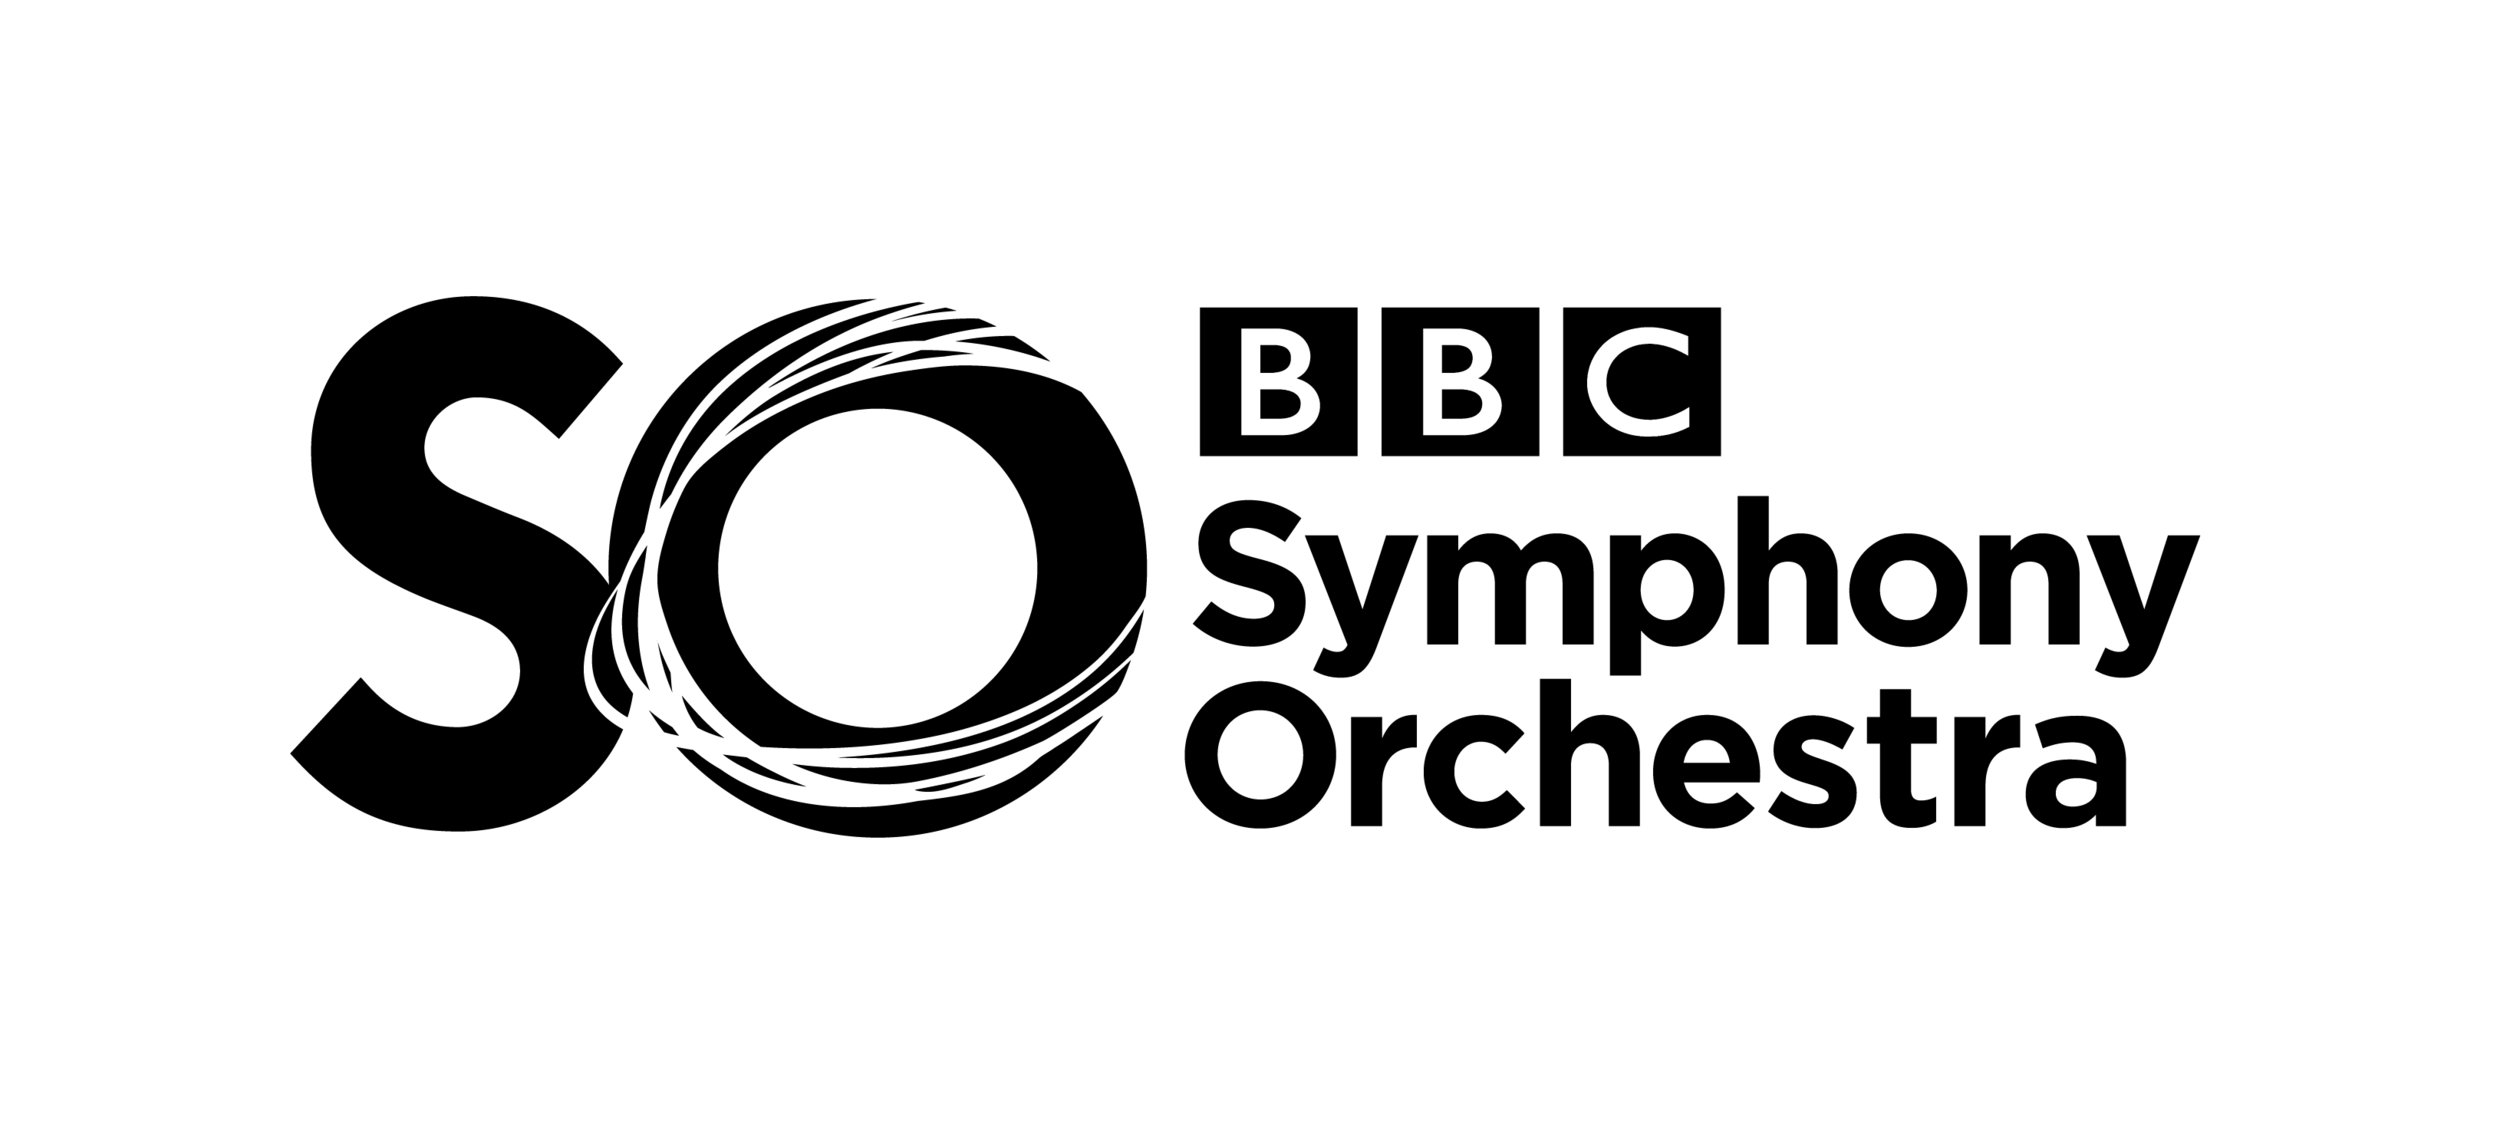 BBC Symphony Orchestra 1.jpg